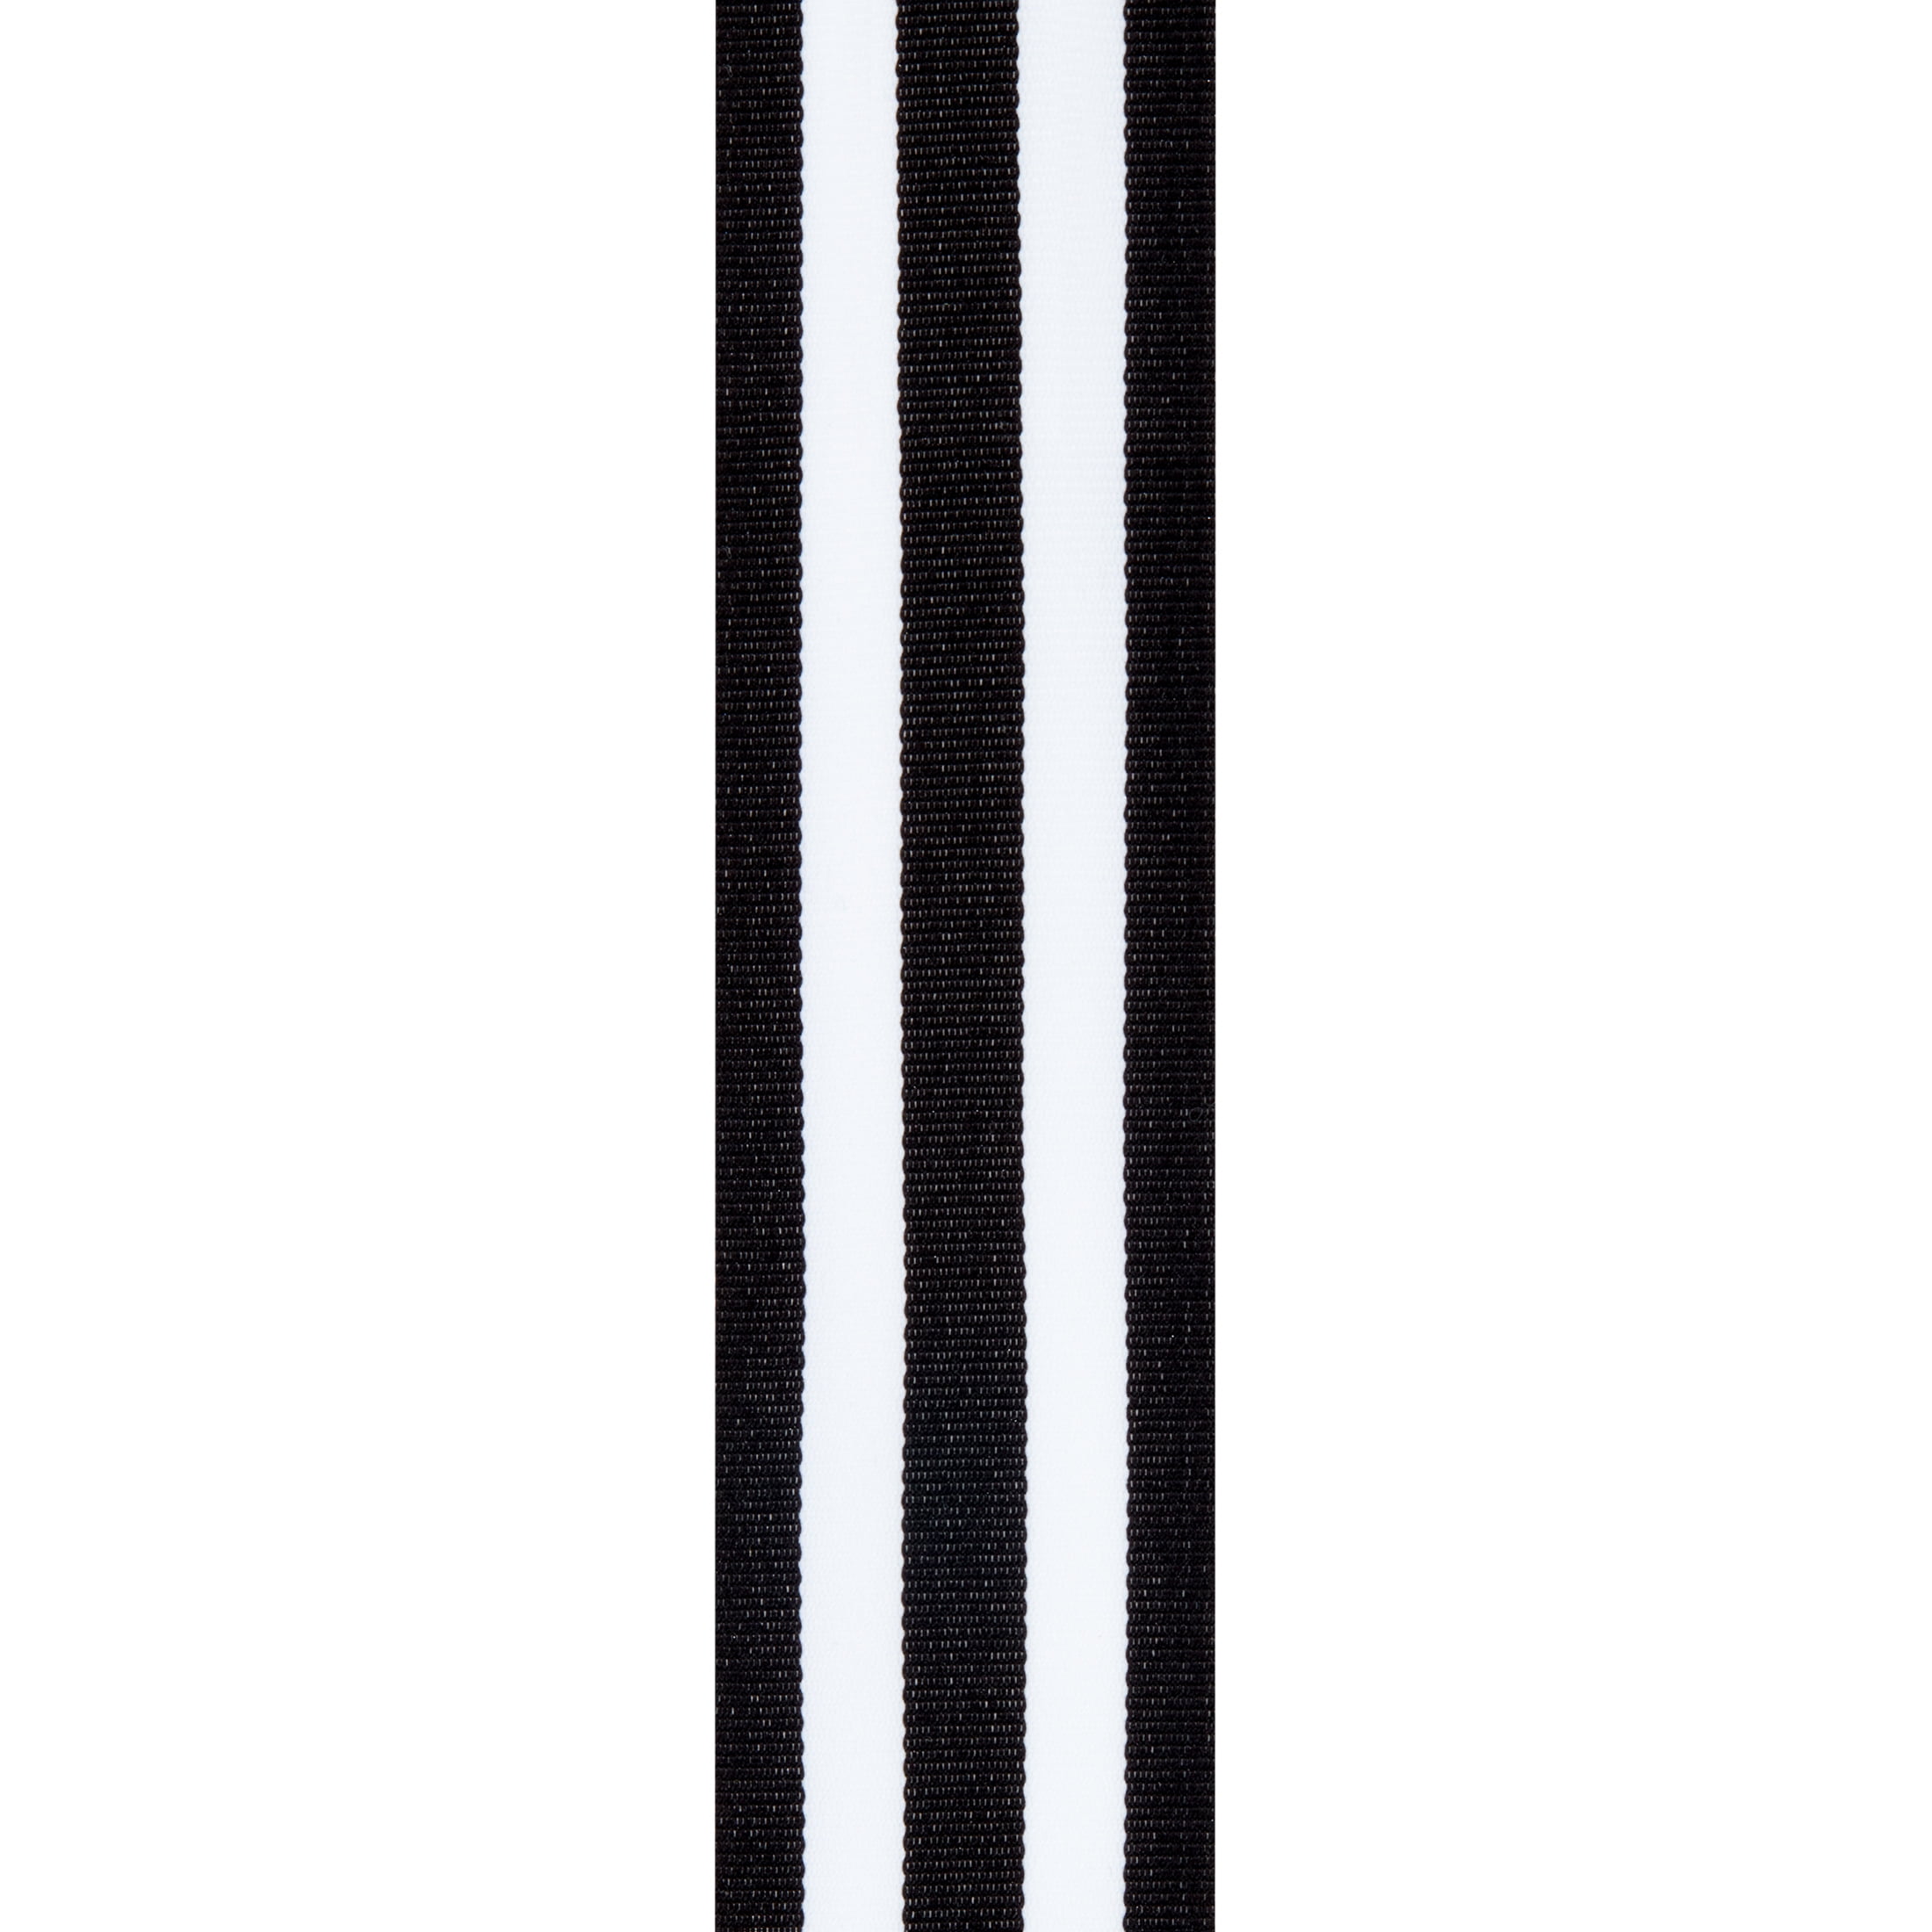 1 Black Grosgrain Ribbon - Wm. Booth, Draper